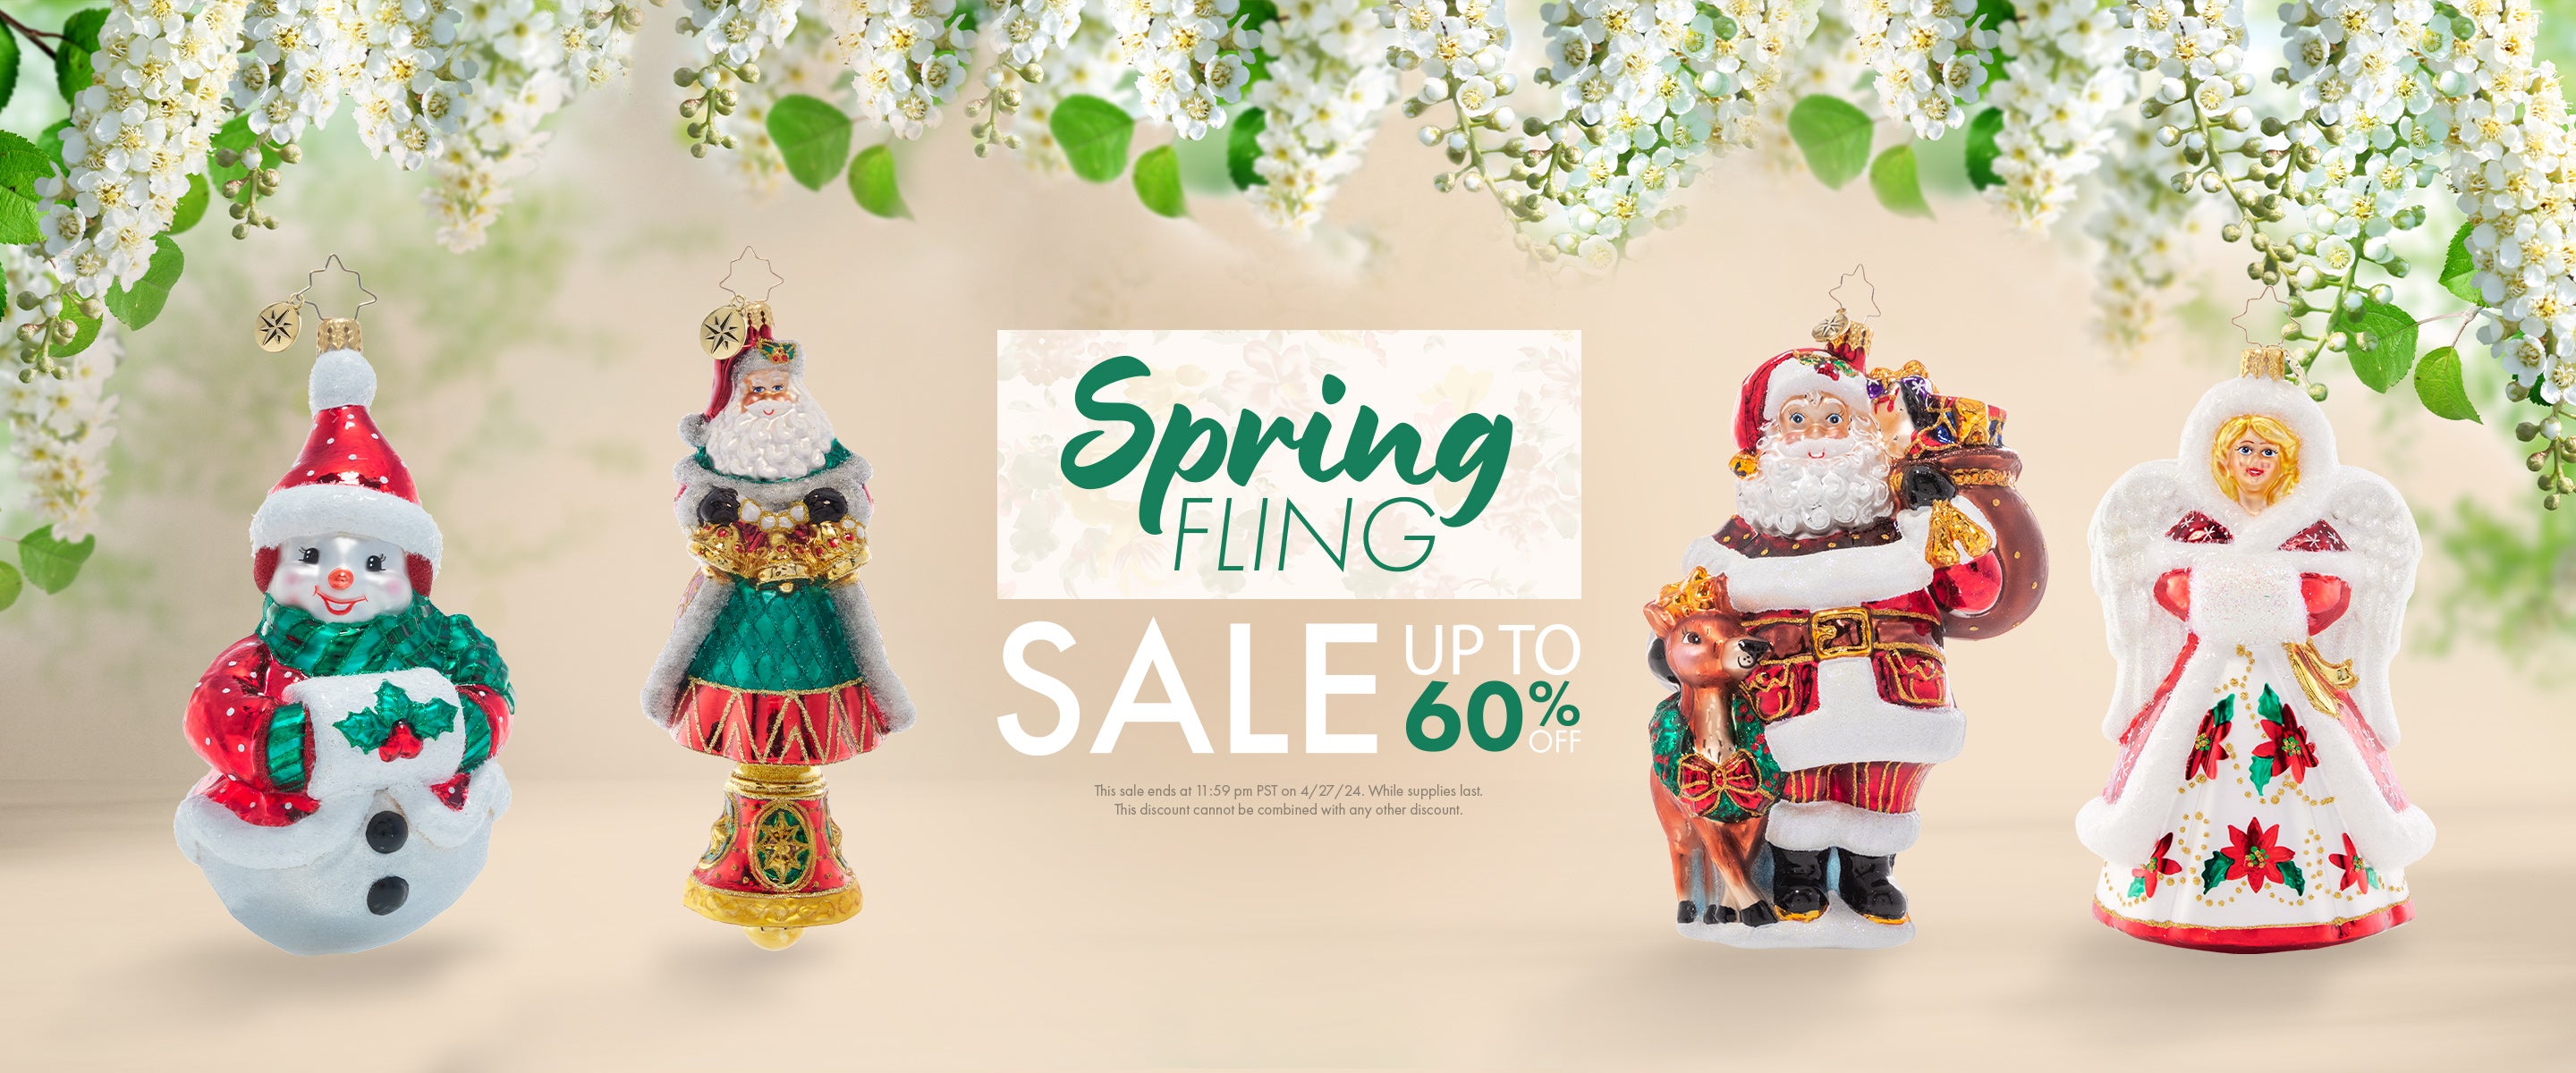 Up to 60% Off Spring Fling Sale